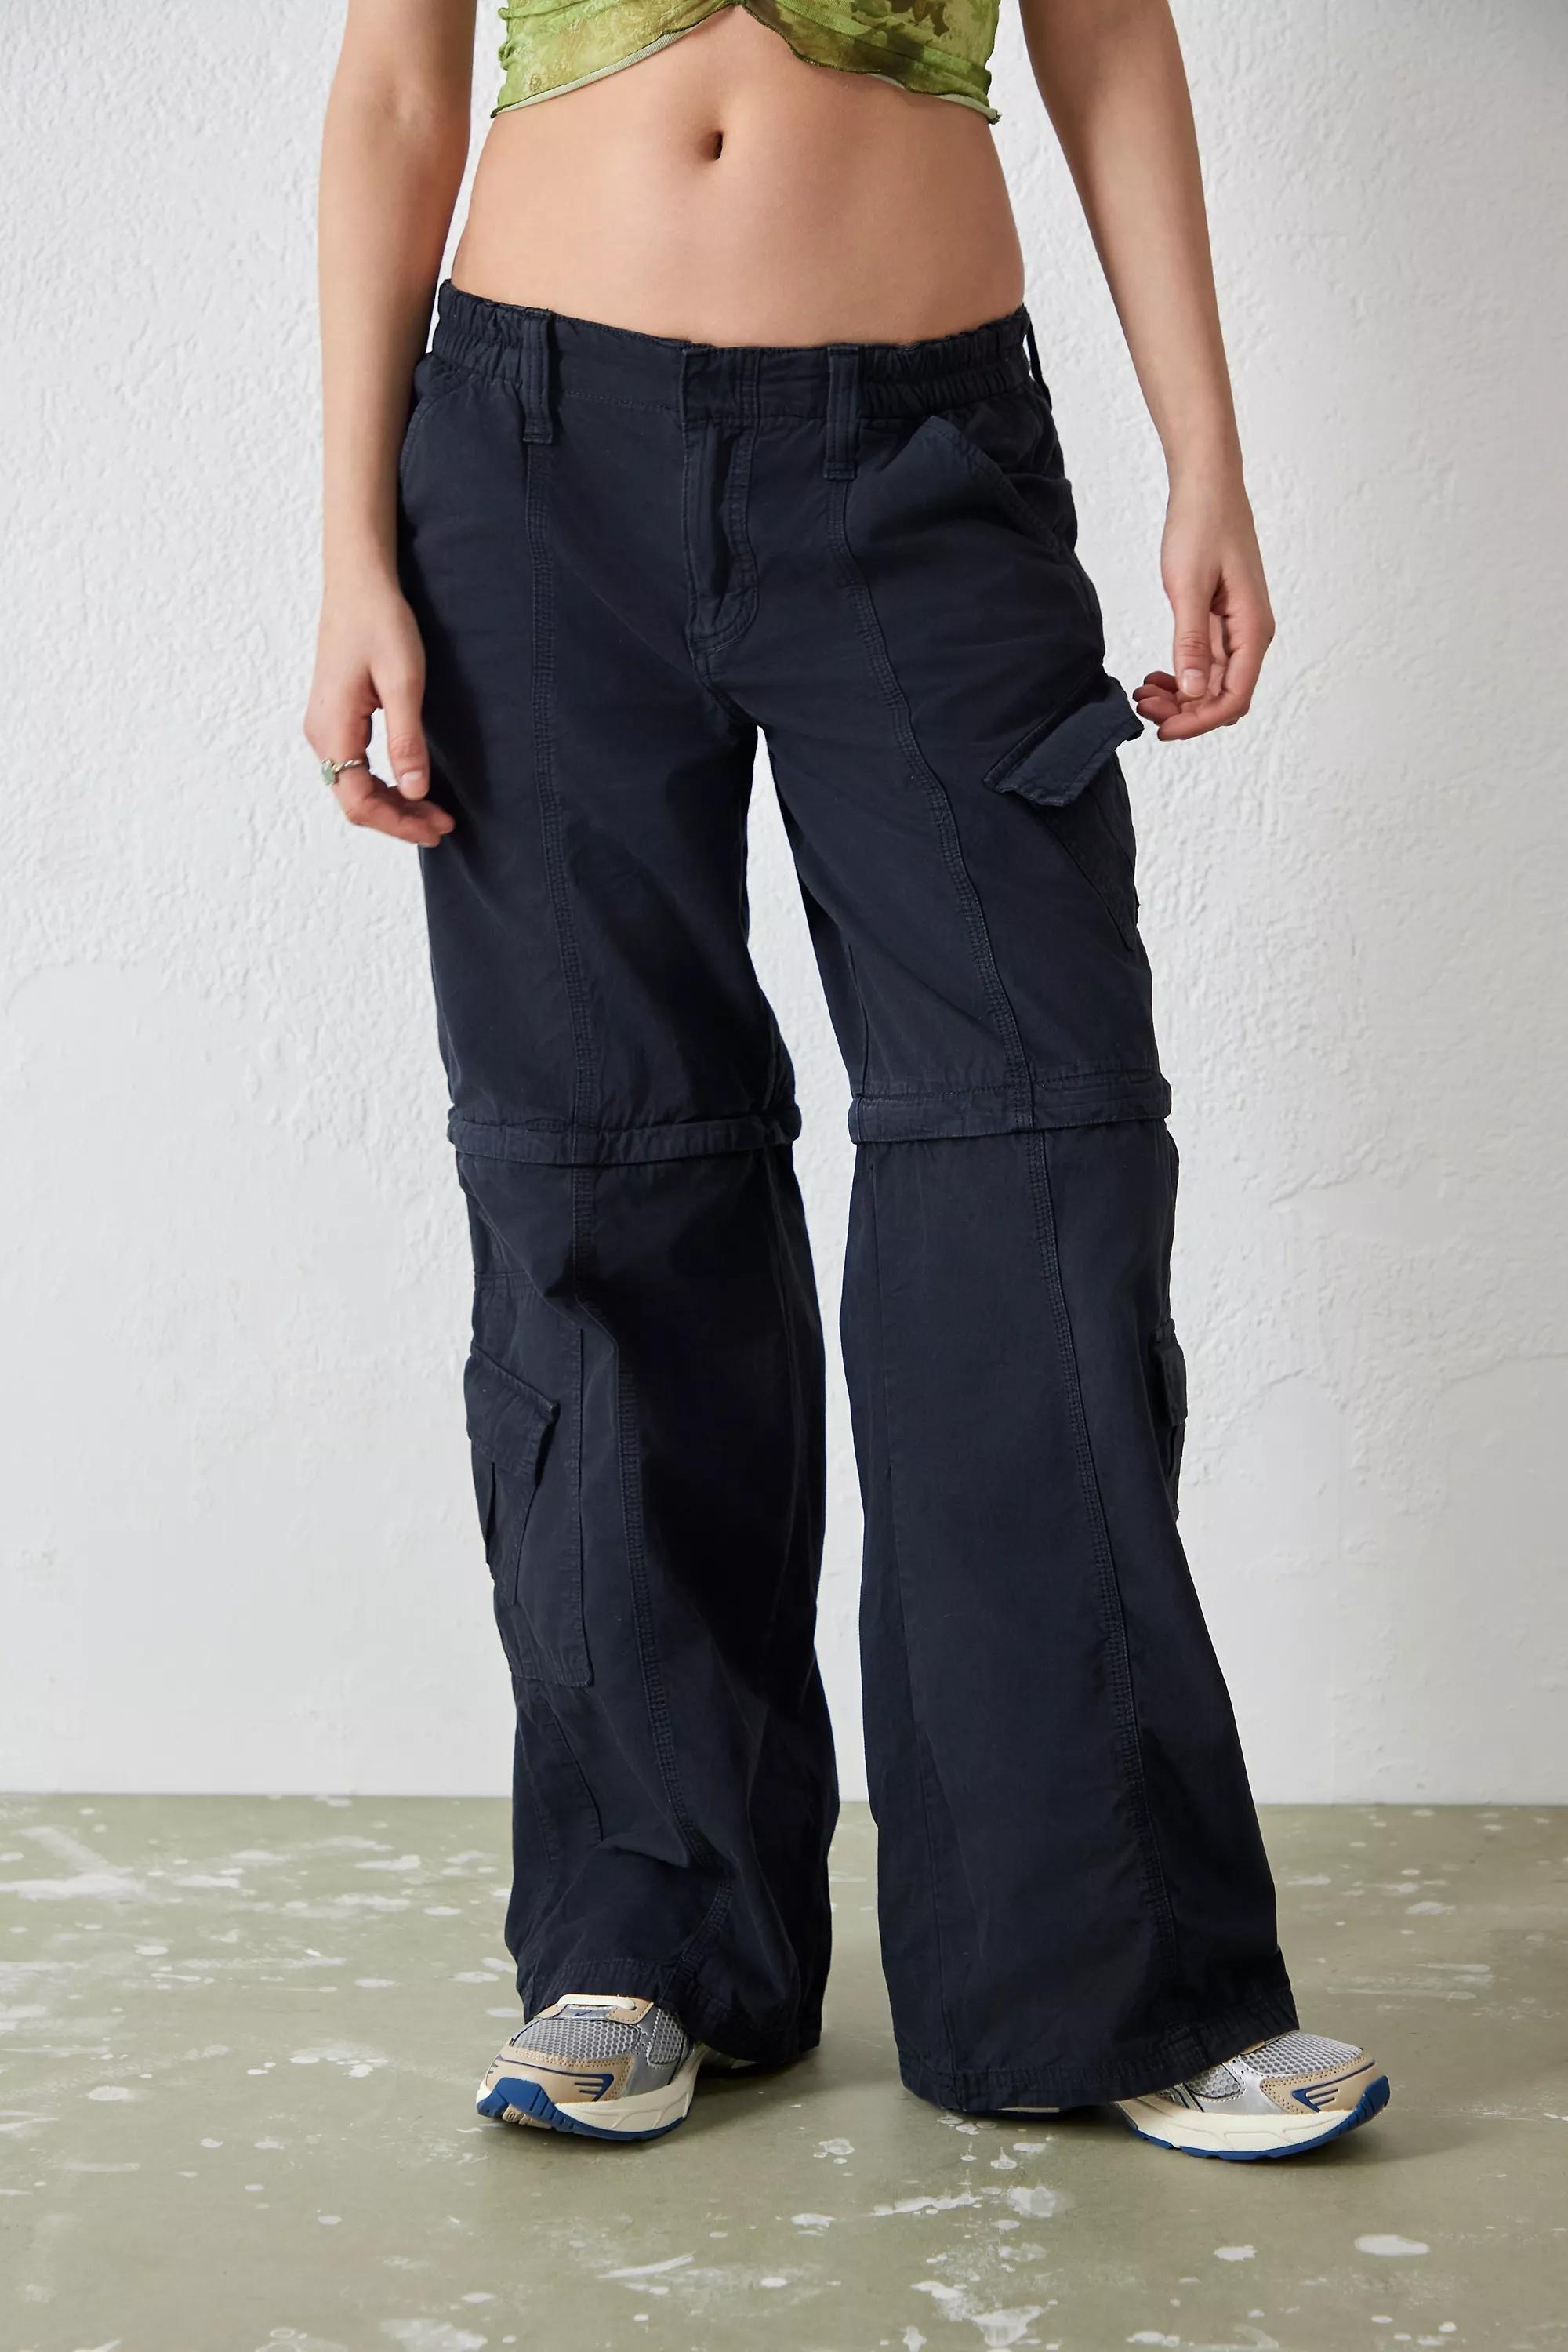 Urban Outfitters Black Zip-Off Y2K Cargo Pants